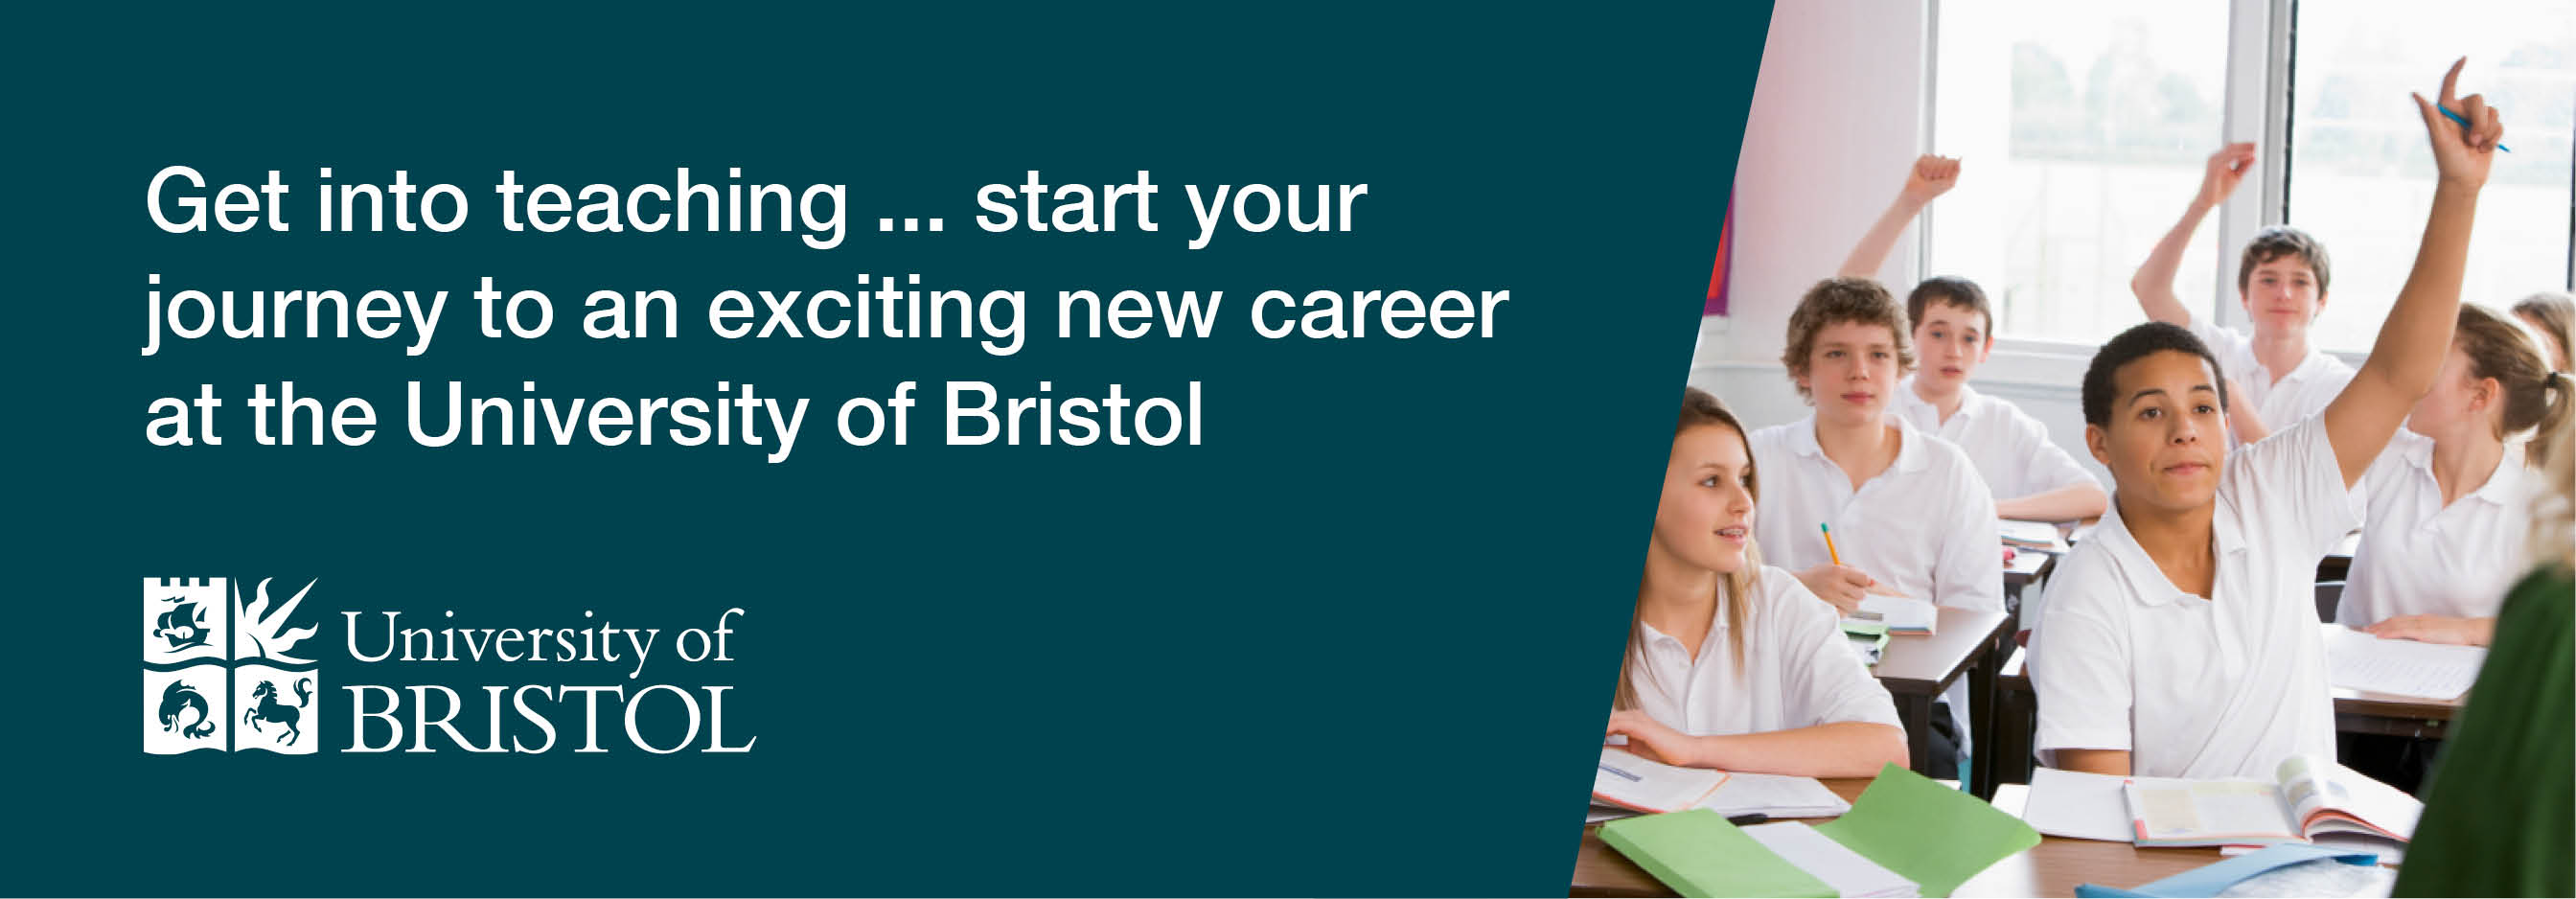 get into teaching at Bristol 